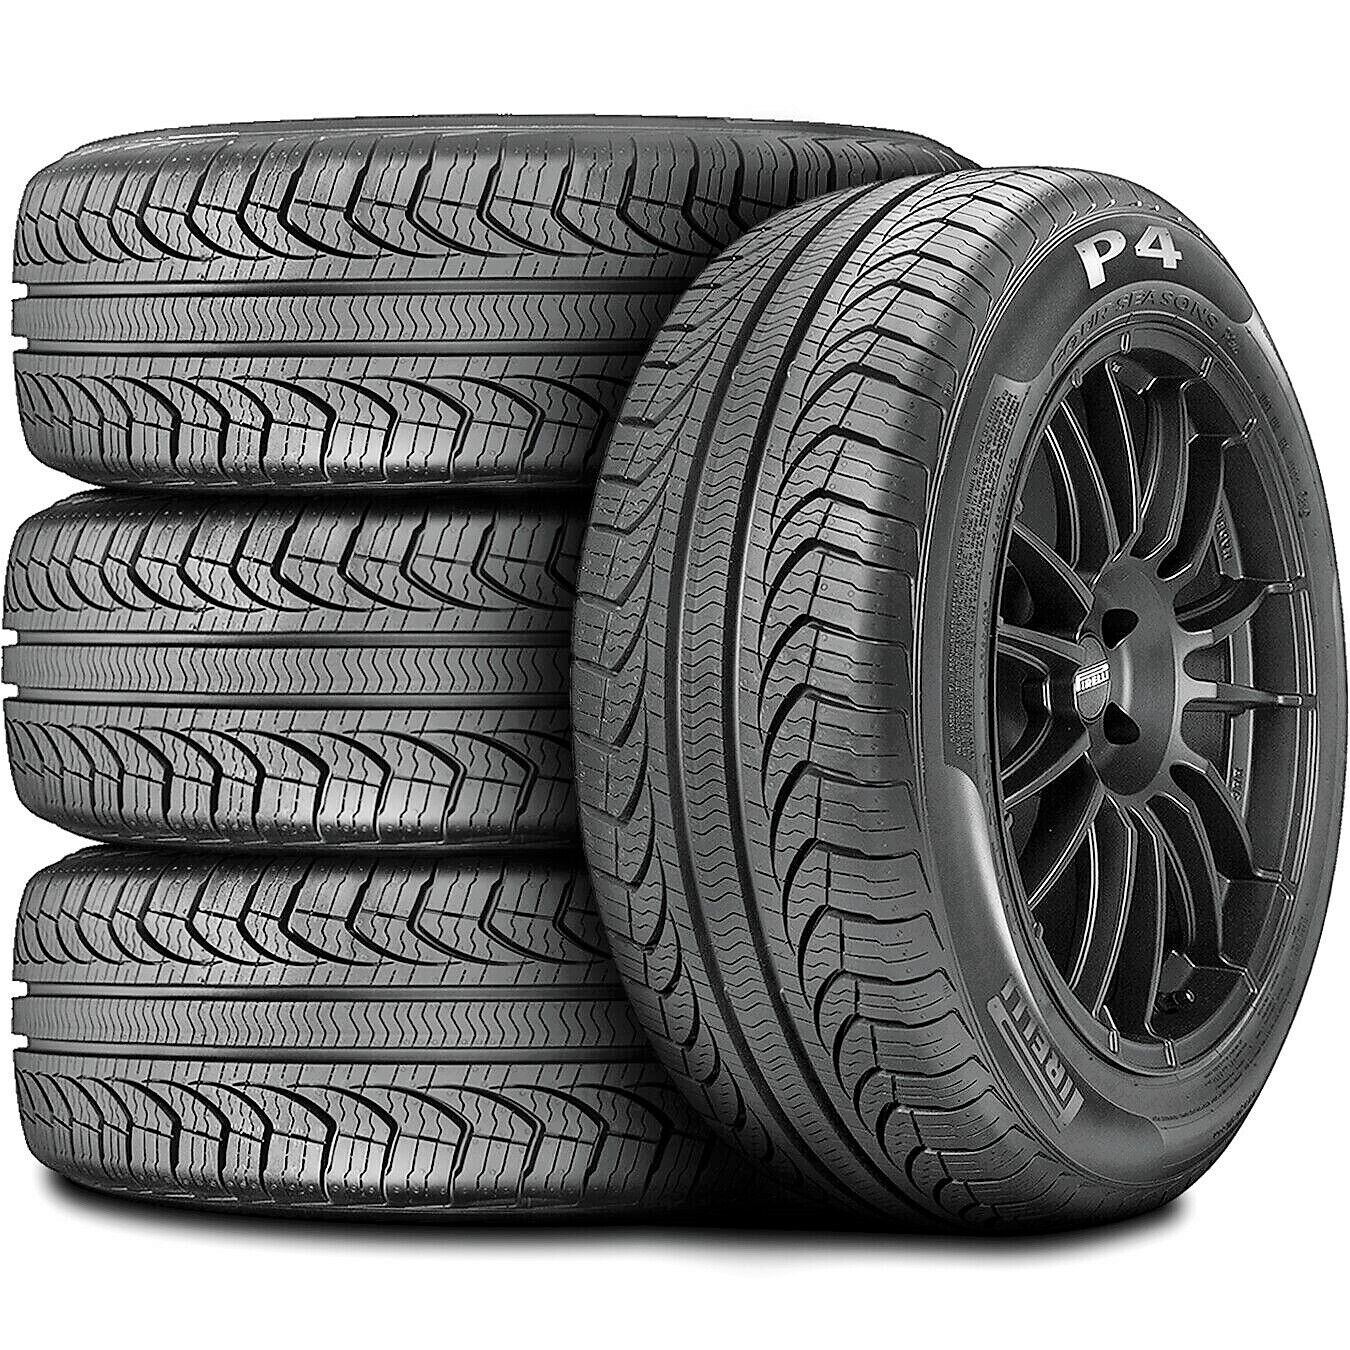 4 Tires Pirelli P4 Four Seasons Plus 205/55R16 91H A/S All Season